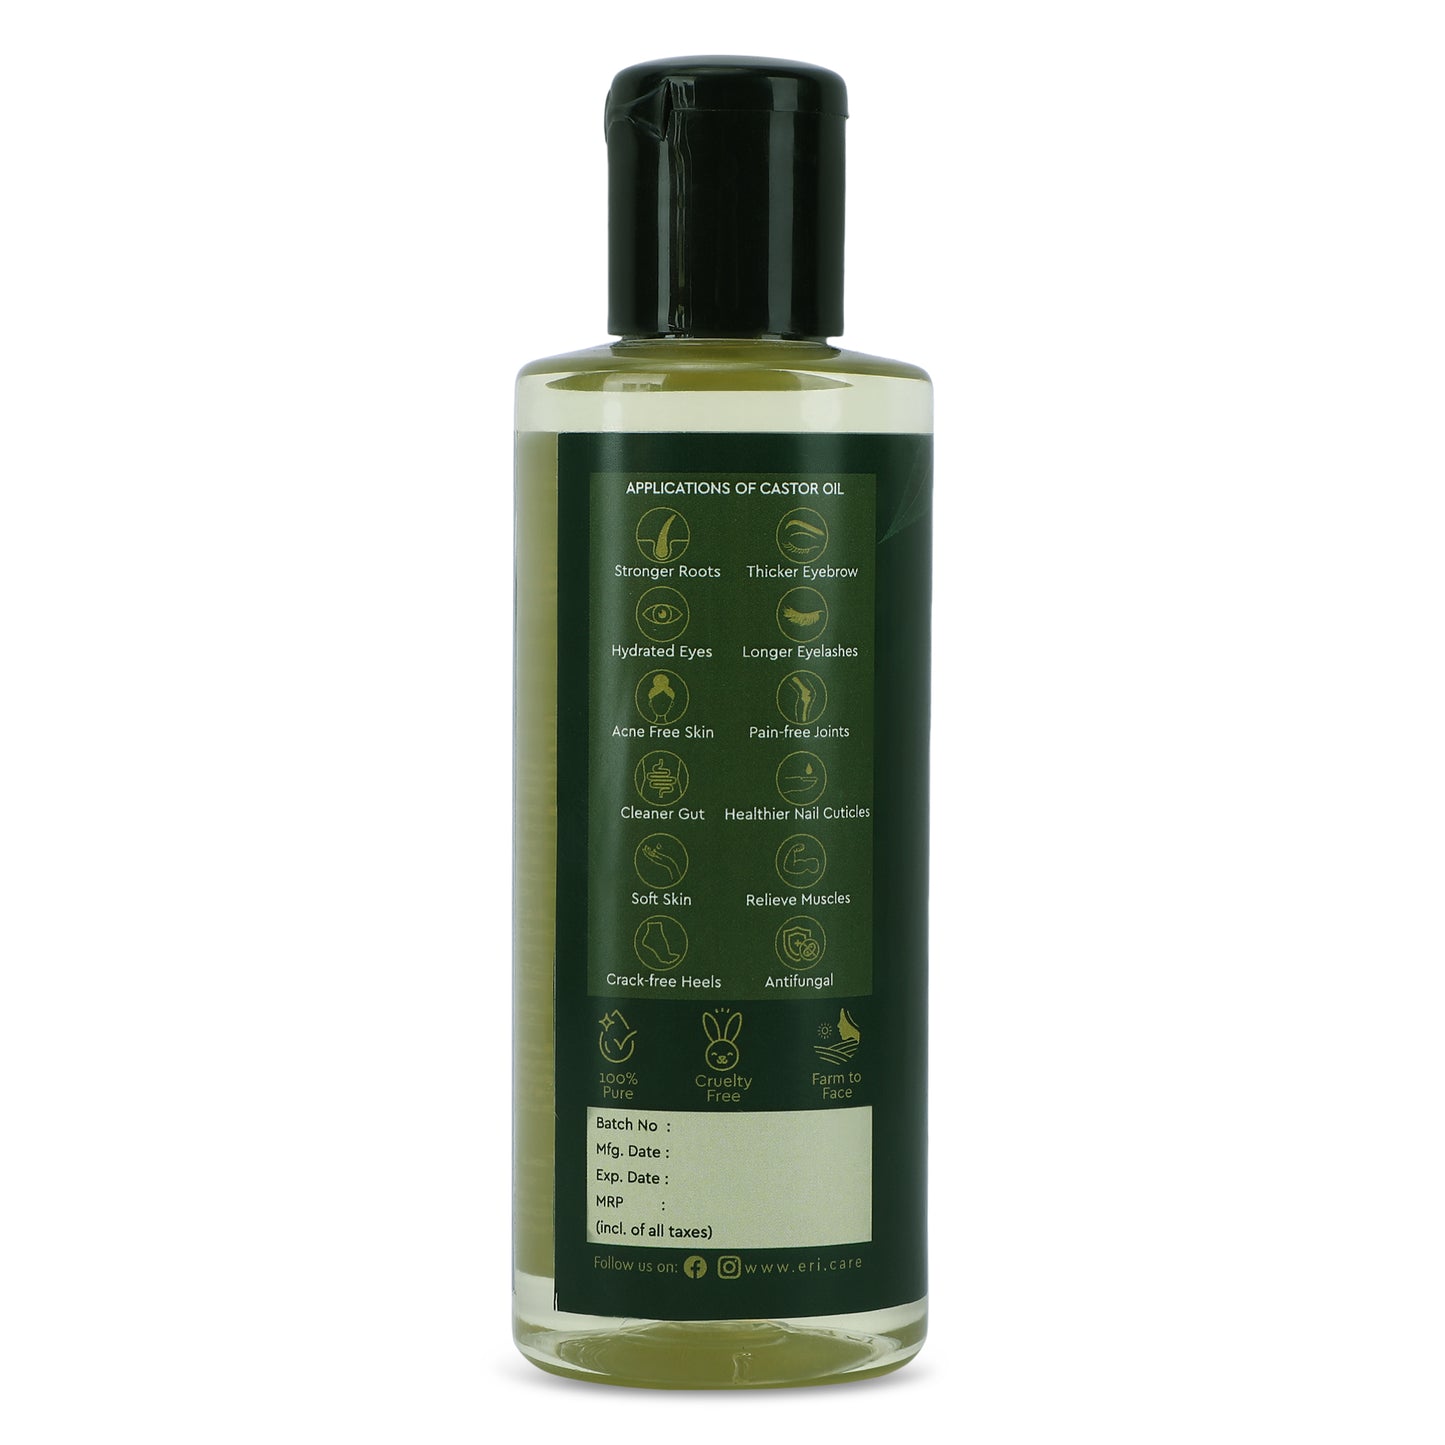 EriCare Organic Castor Oil bottle backview showing beneficial applications of using organic castor oil for hair, skin and eyelashes